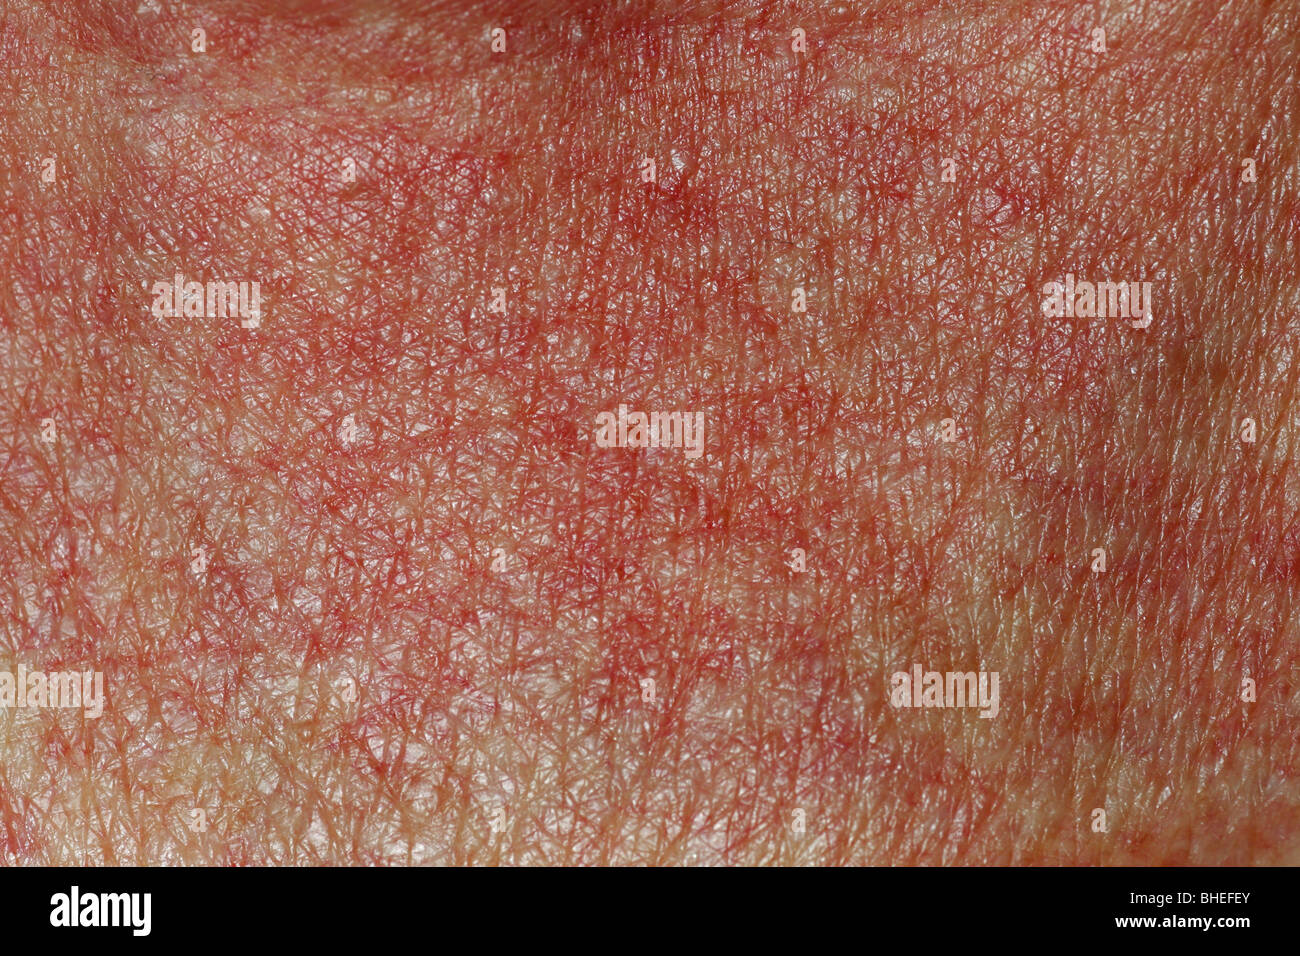 Skin Rash or dermatitis on a sick person Stock Photo